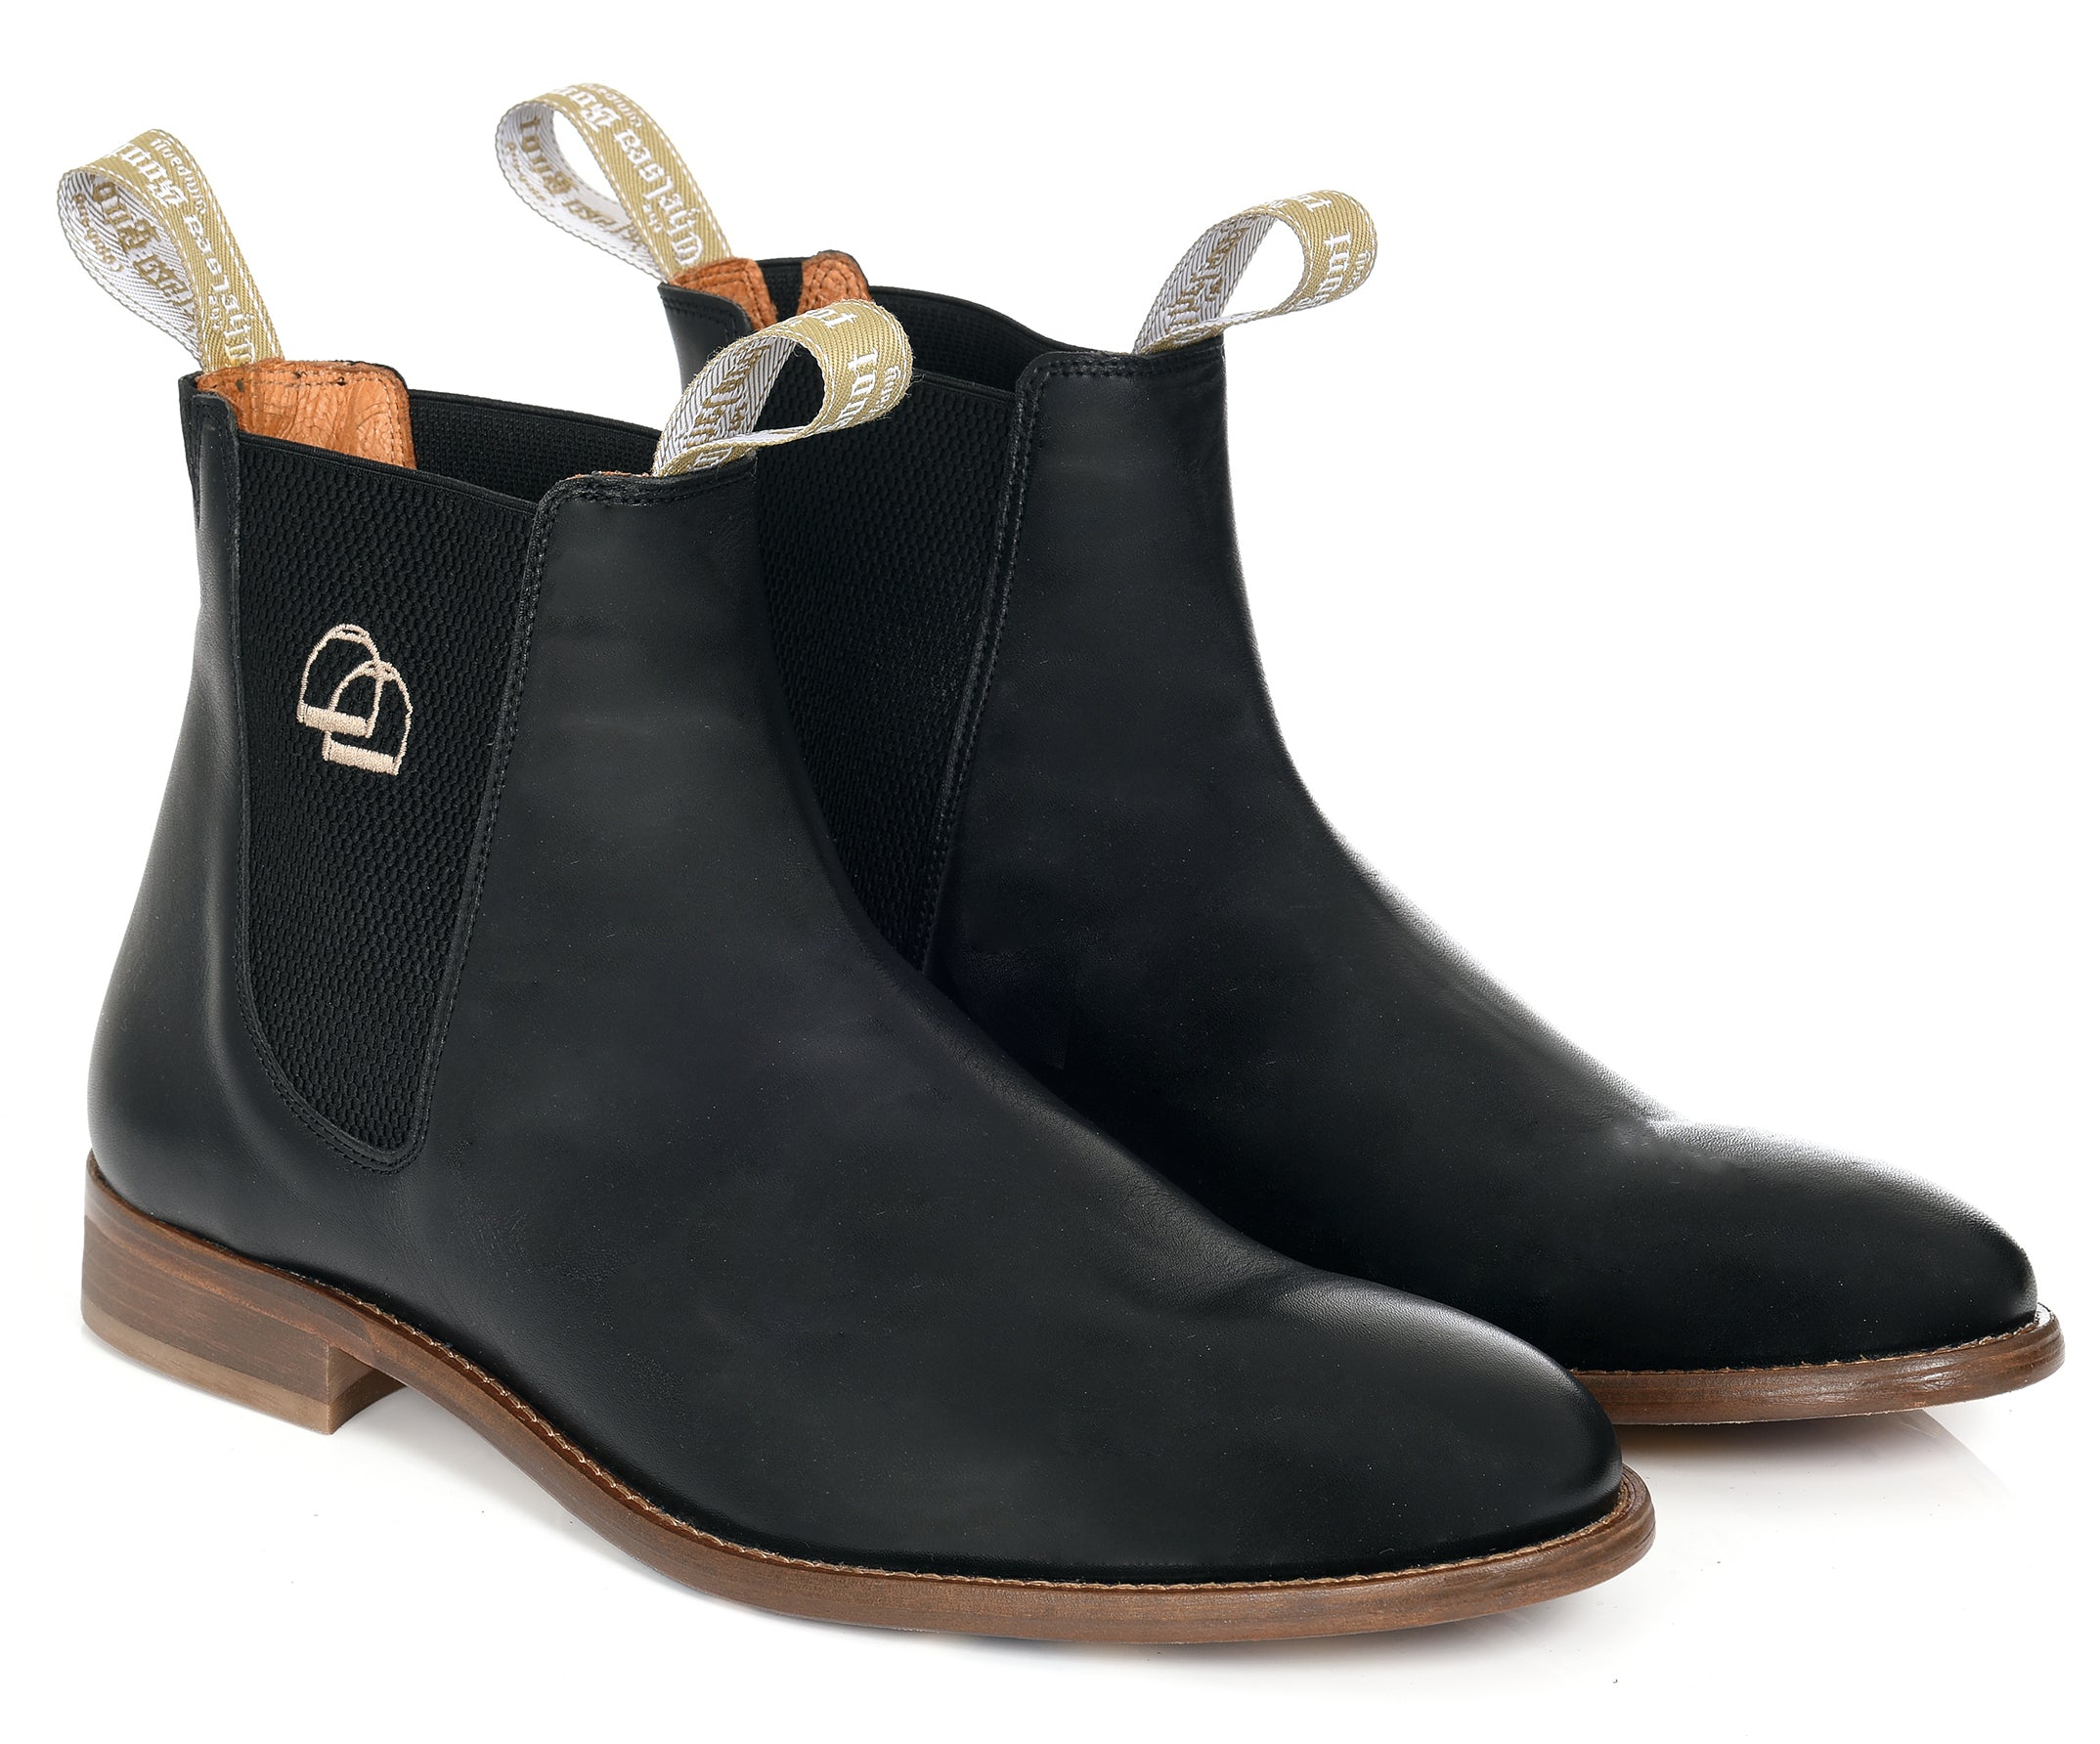 Men’s The Original Chelsea Boot - Black 7 Uk The Chelsea Boot Co Est. 1851